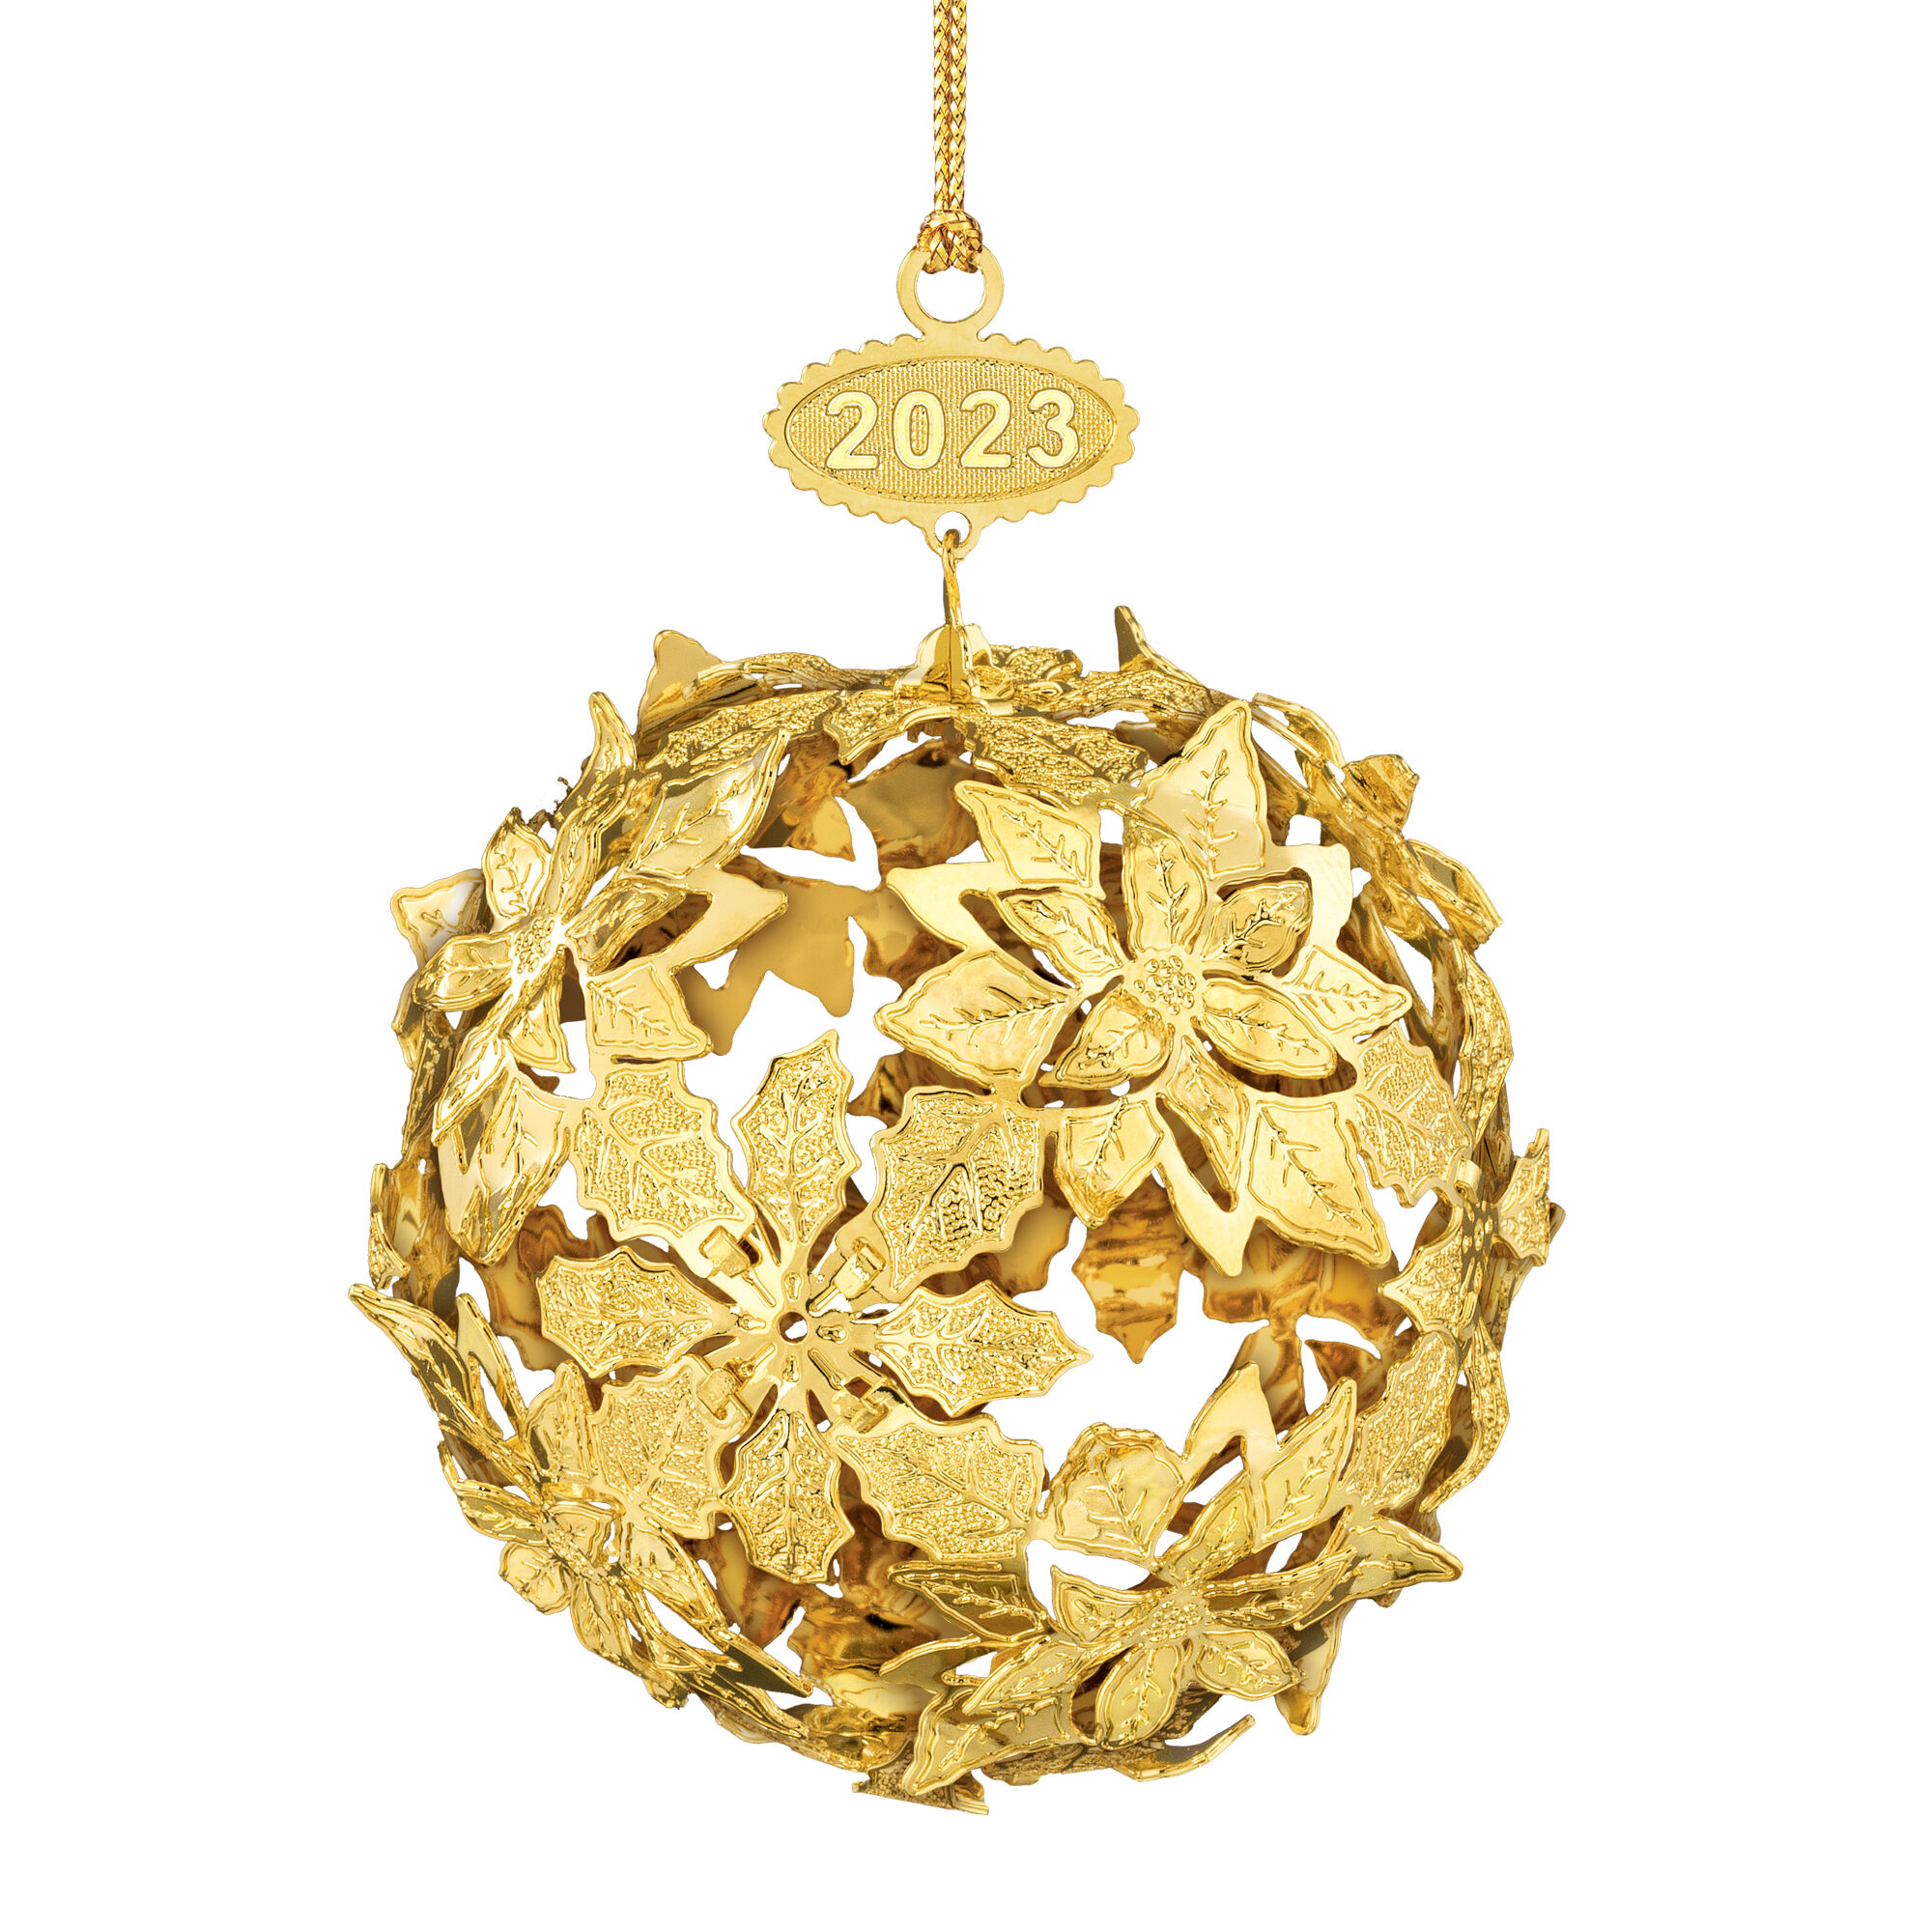 The 2023 Annual Gold Ornament 819 0290 a main